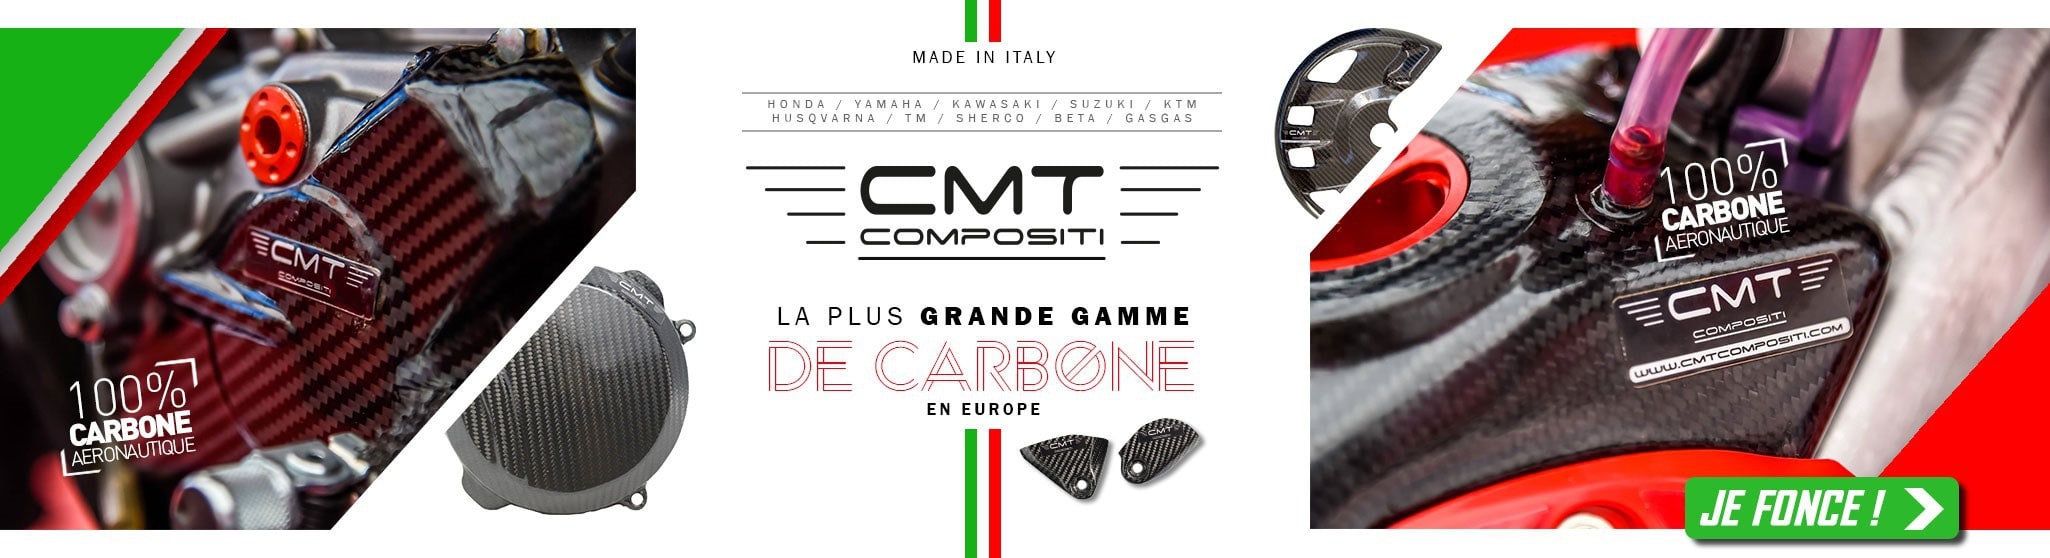 CMT La plus grande gamme de carbone en europe !